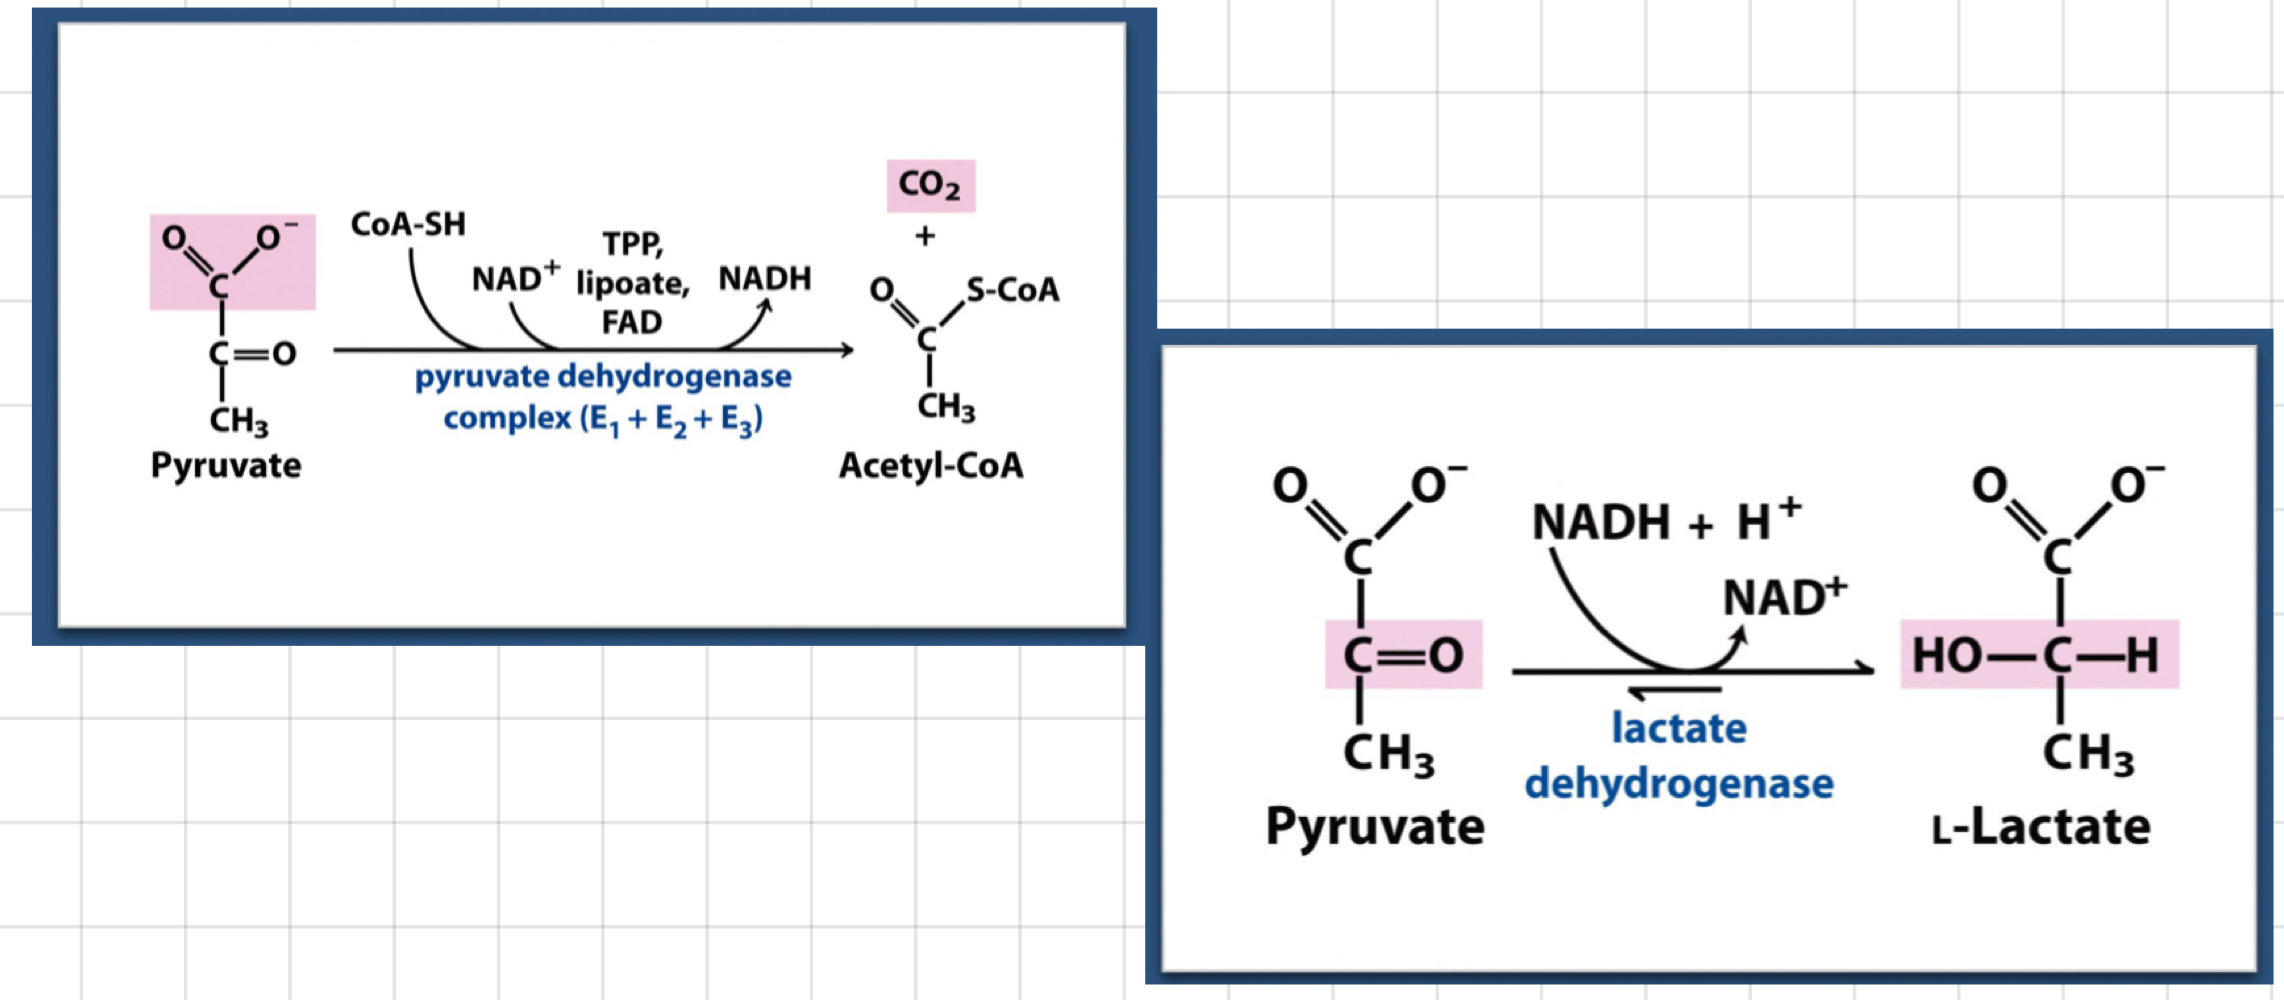 <ul><li><p>2 ATP, 2 pyruvate and 2 NADH (need to generate NAD+)</p></li><li><p>Fate of pyruvate (Aerobic and Anaerobic)</p></li><li><p>Get more ATP from full oxidation of pyruvate</p><ul><li><p>Need to transport into mitochondria</p></li><li><p>Oxidise with <strong>pyruvate dehydrogenase (PDH)</strong></p></li></ul></li><li><p>Reoxidise NADH quickly → Important</p><ul><li><p>Maintain the supply of NAD+</p><ul><li><p>Lactate production</p></li><li><p>Alcohol production (in yeast)</p></li></ul></li><li><p>Keep everything cytosolic</p></li></ul></li></ul>